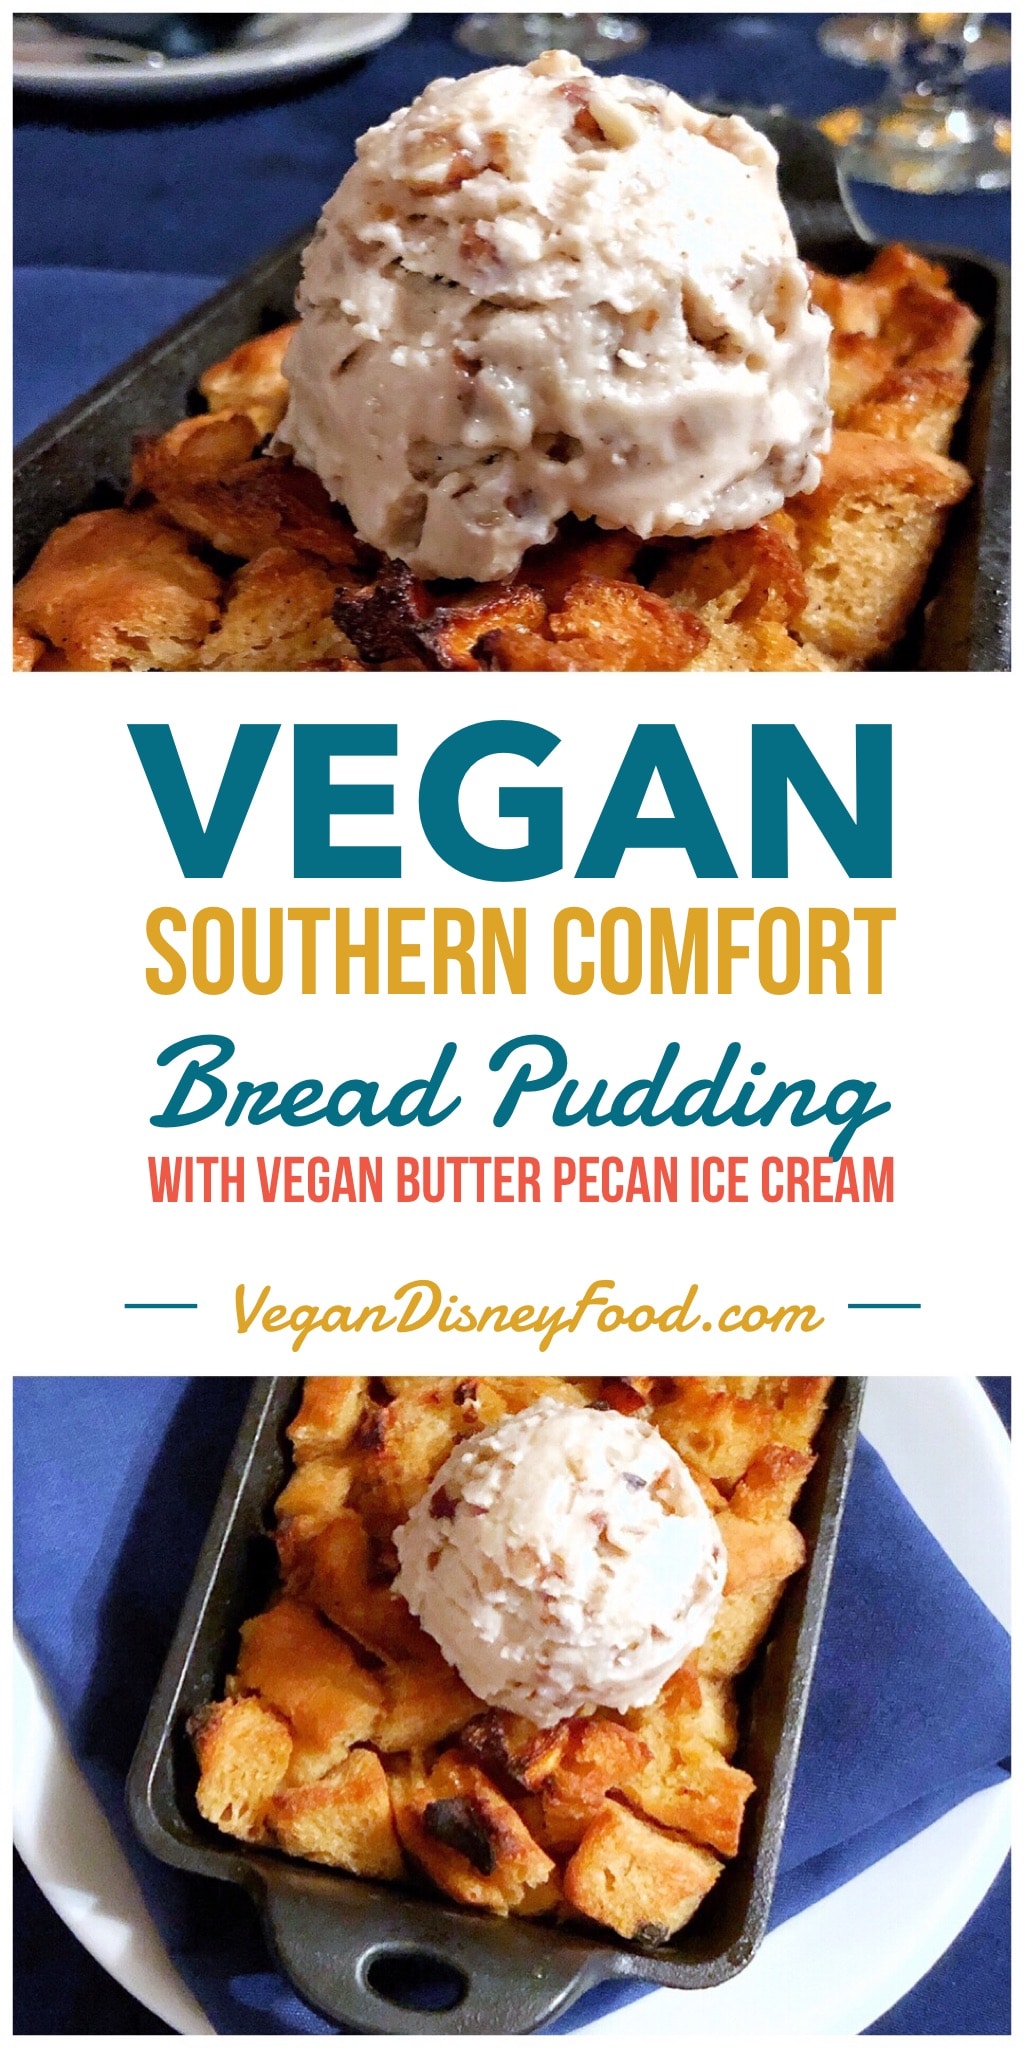 Vegan Southern Comfort Bread Pudding at Narcoossee’s in Disney’s Grand Floridian Resort at Walt Disney World